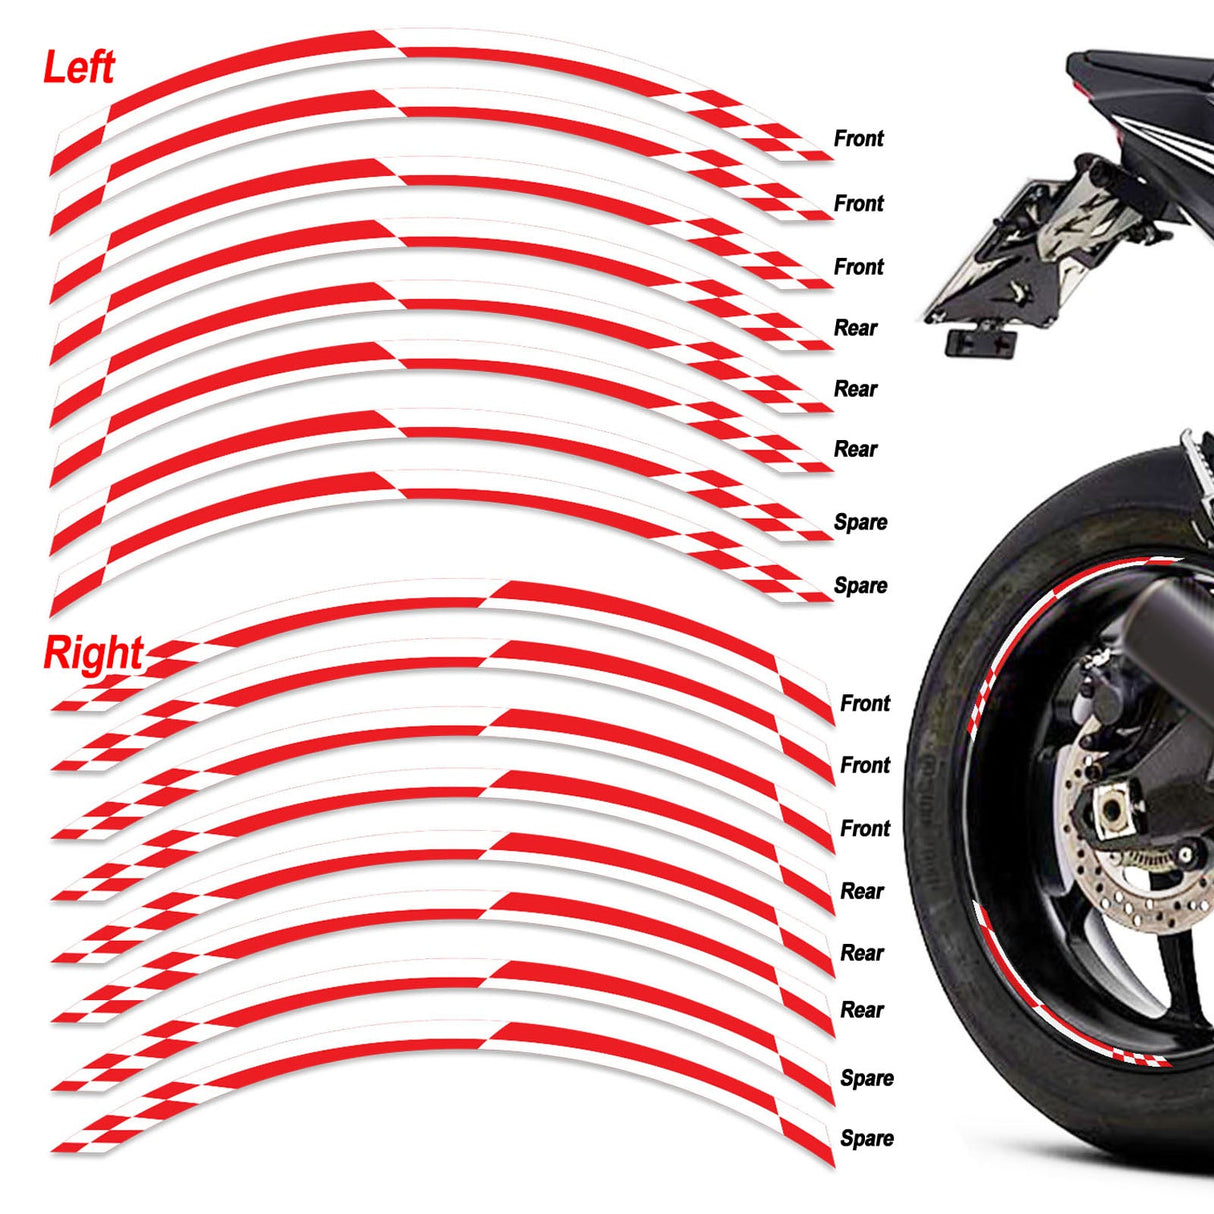 StickerBao Red Universal 17 inch Motorcycle Check01 White Standard Edge Rim Sticker Check Rim Wheel Decal For For Suzuki